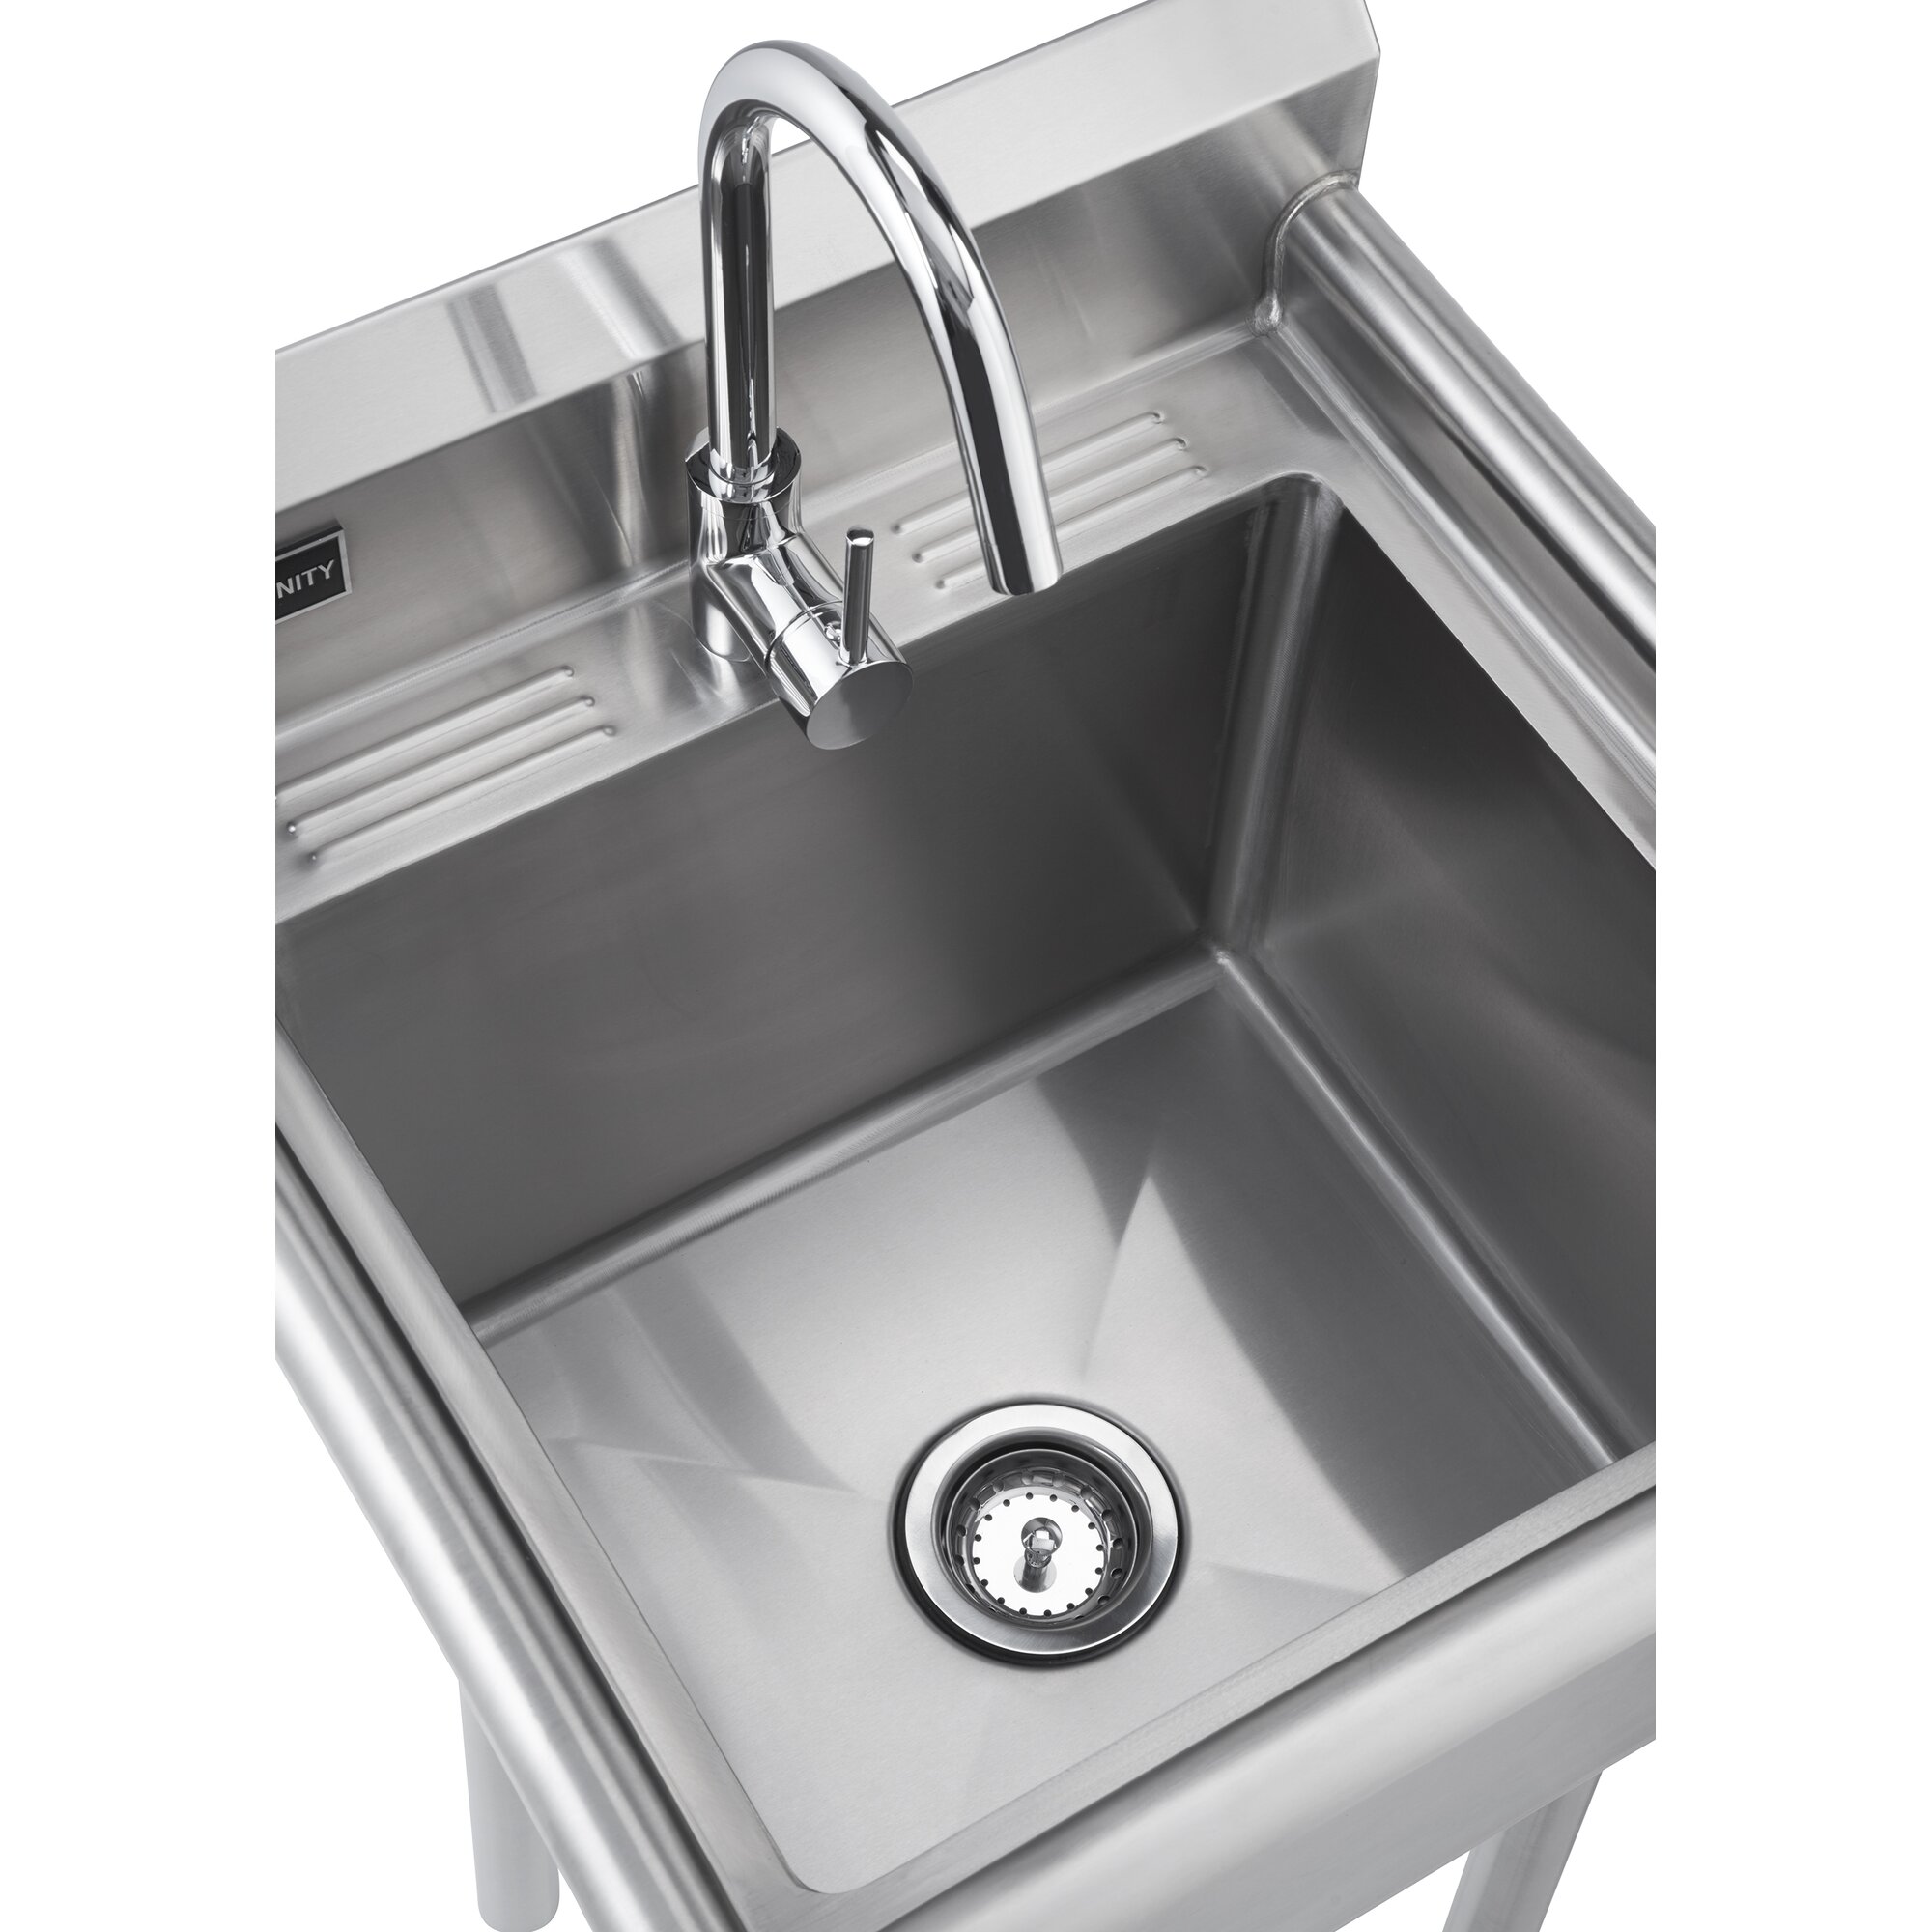 trinity stainless steel utility sink